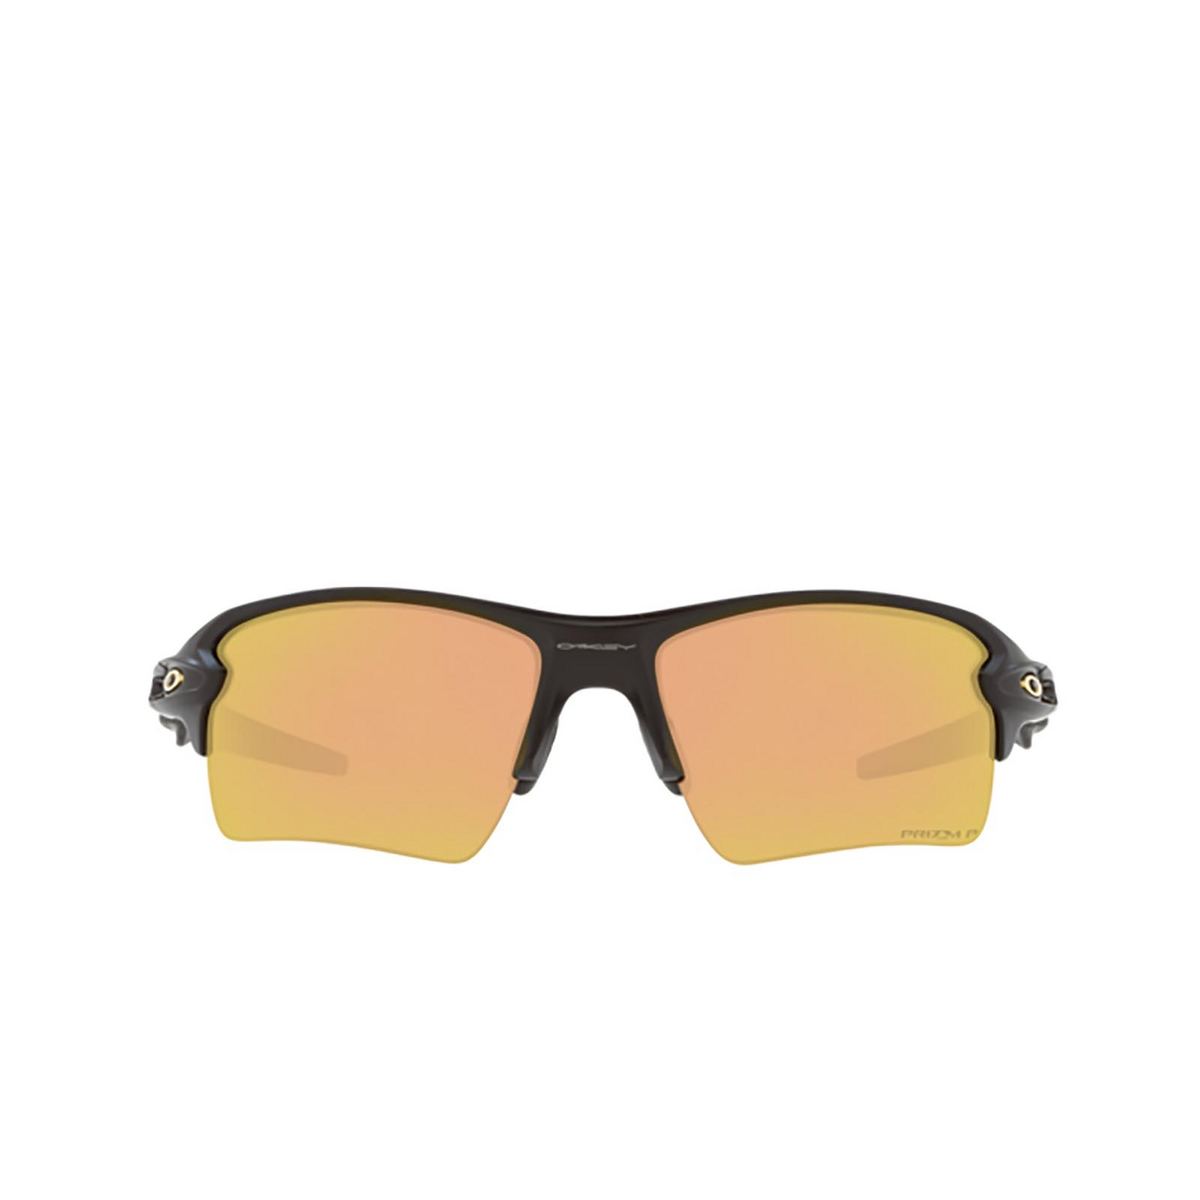 Oakley® Sport Sunglasses: Flak 2.0 Xl OO9188 color Matte Black 9188B3 - front view.